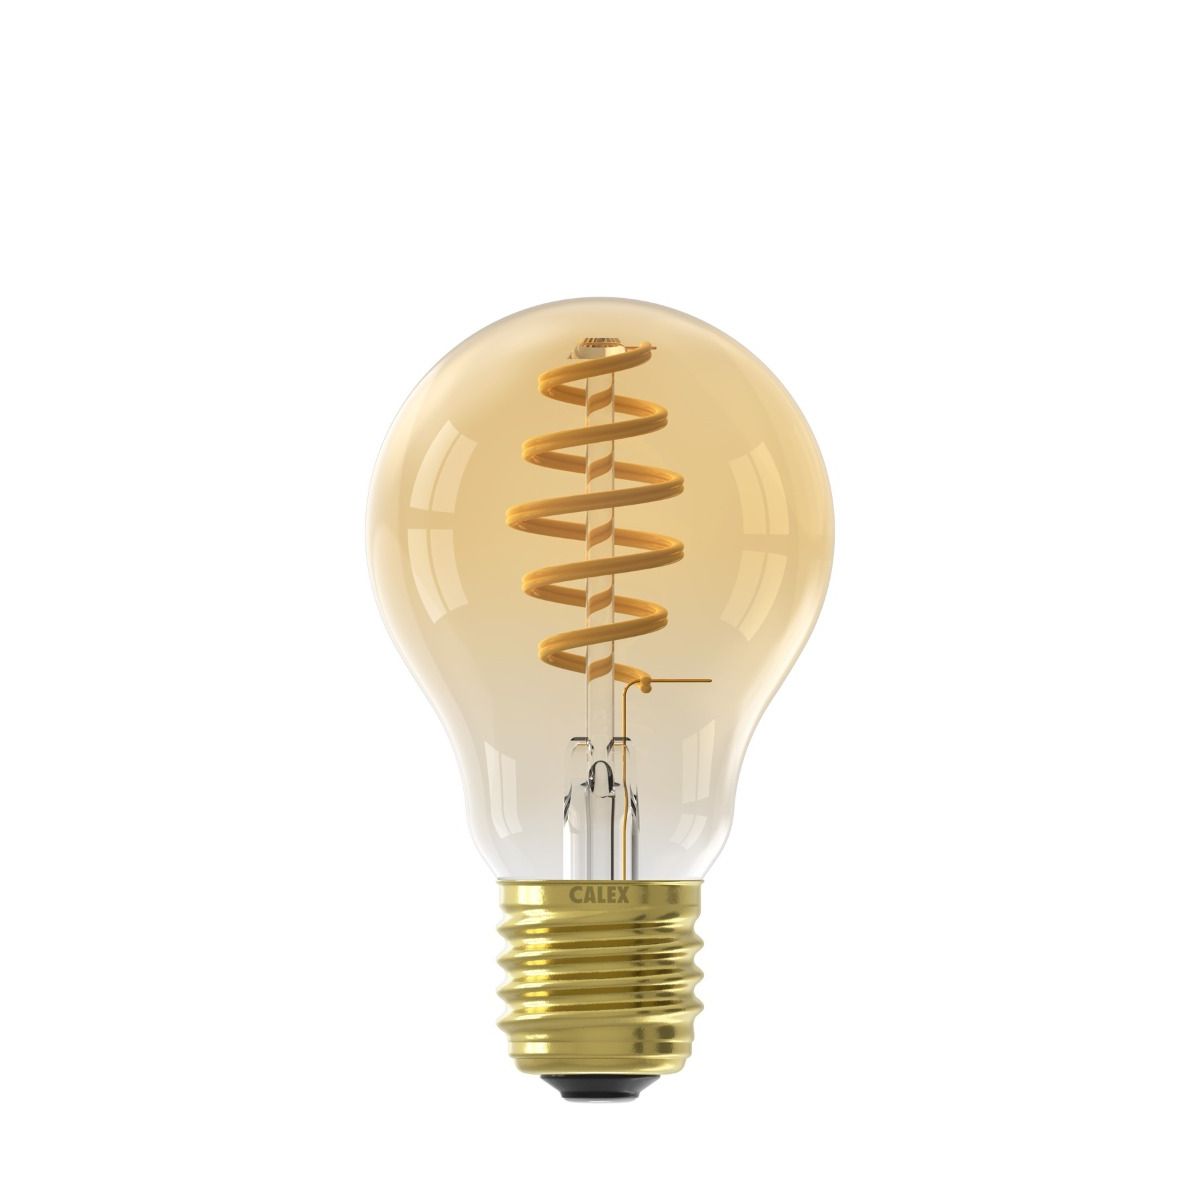 ontsnappen vergeven Krachtcel Calex Smart - Standaard led lamp - Ø 6 x 10,5 cm - 7W - dimfunctie en  instelbare lichtkleur via app - RGB+W - amber